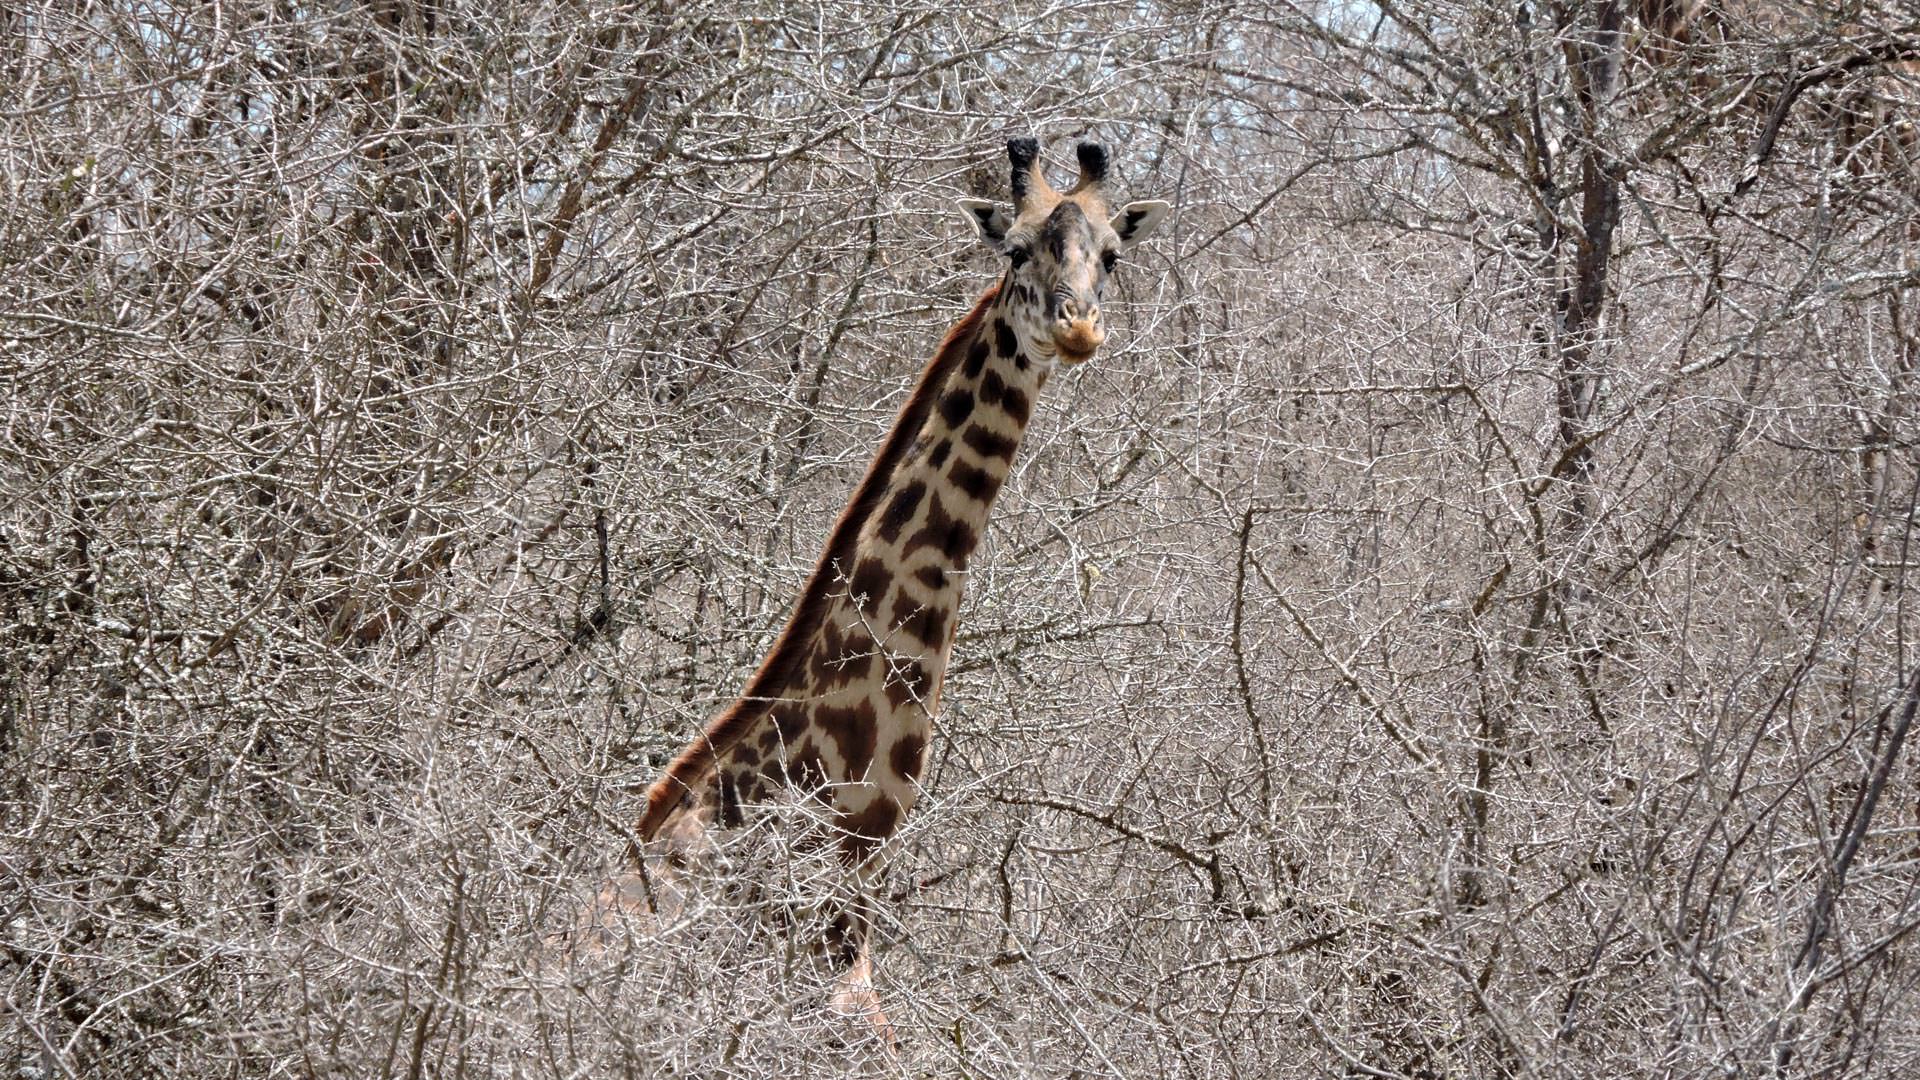 Giraffe in thorn thicket